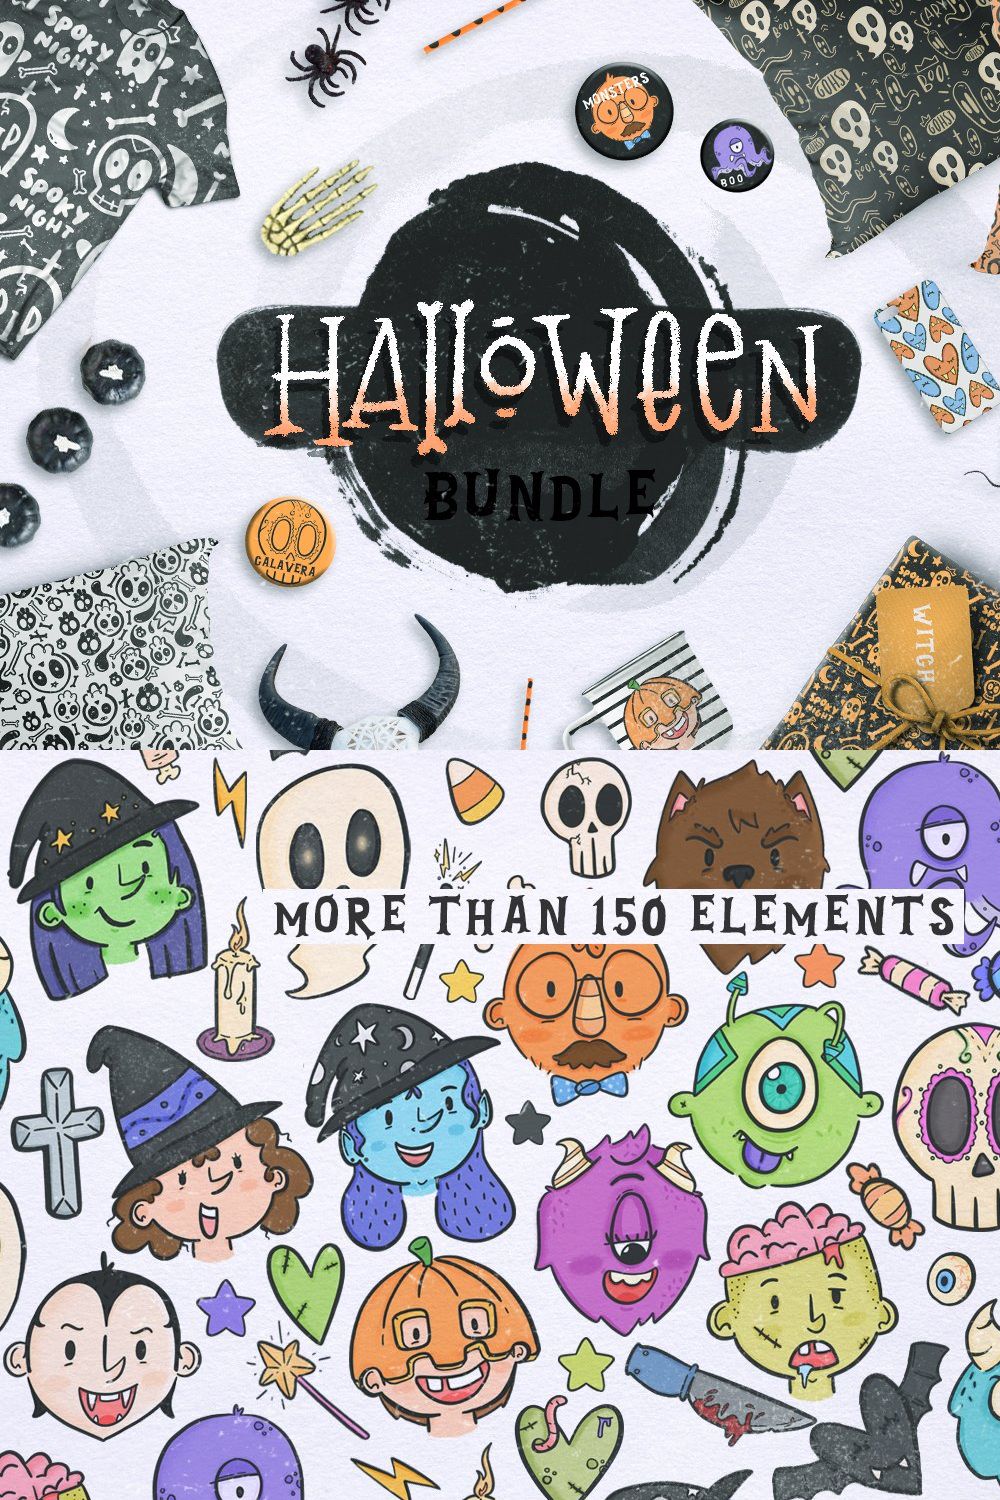 Halloween BUNDLE + 150 ELEMENTS! pinterest preview image.